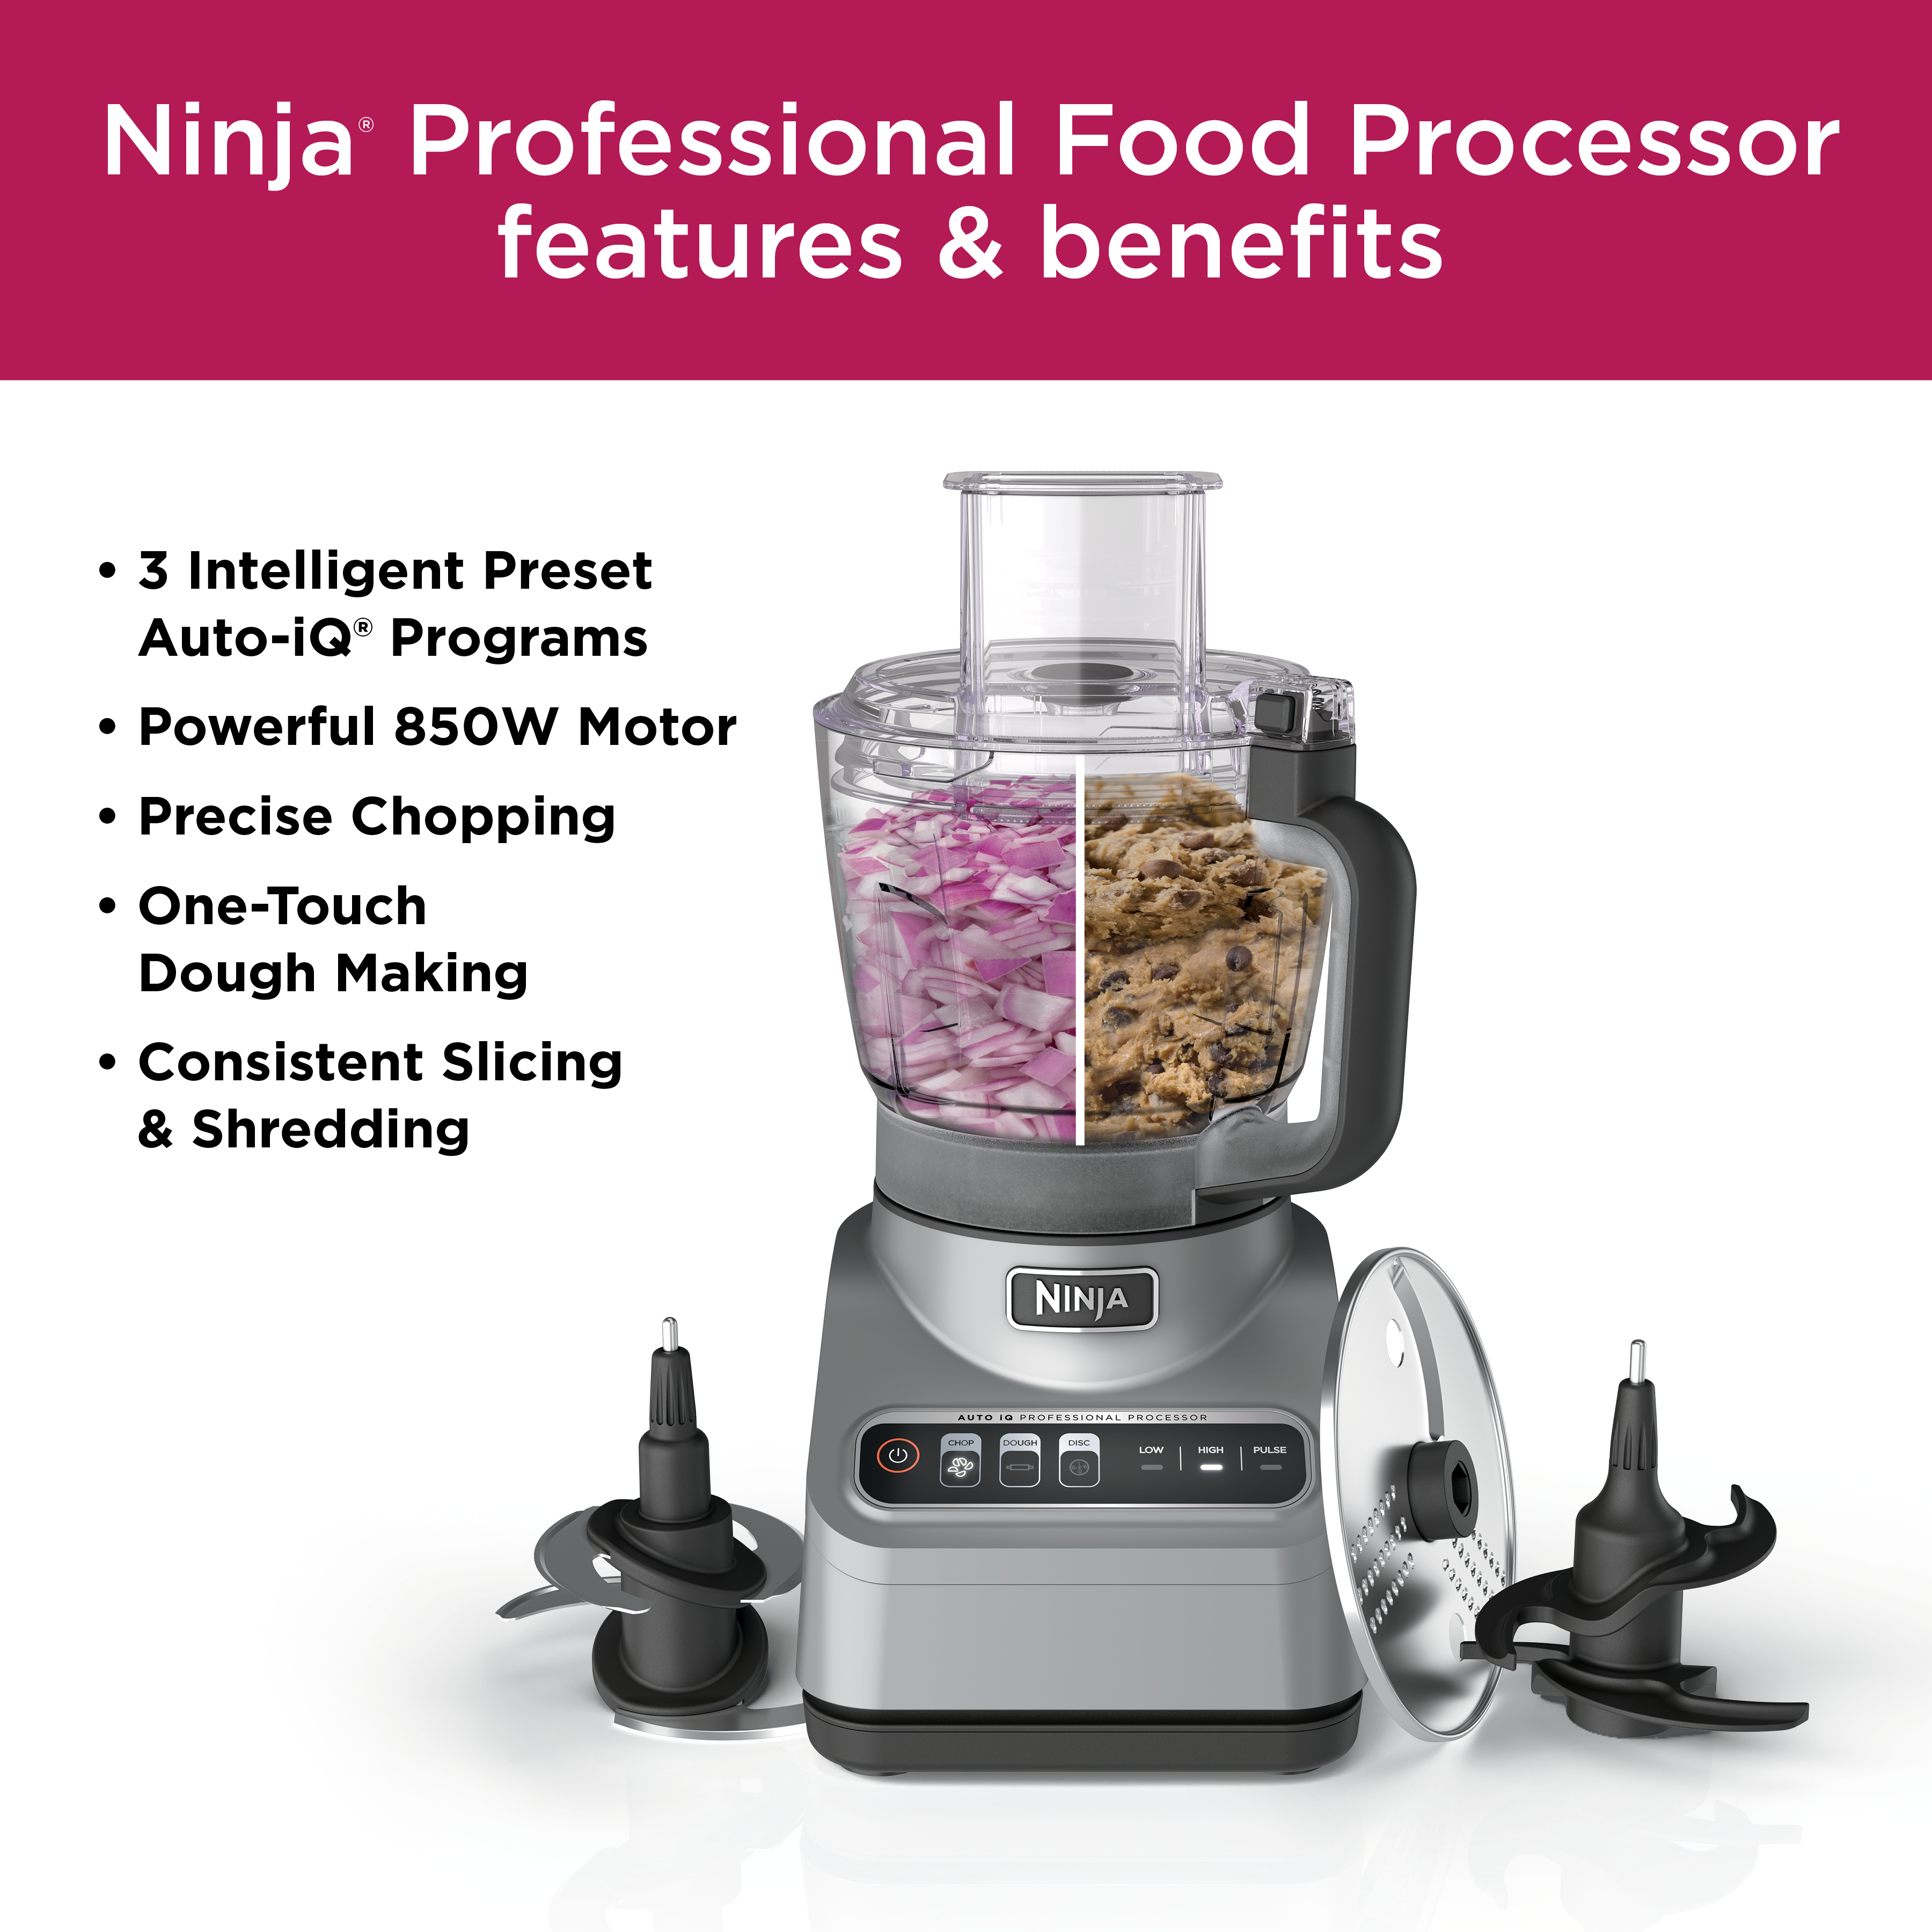 Ninja® Professional Food Processor, 850 Watts, 9-Cup Capacity, Auto-iQ Preset Programs, BN600 - image 5 of 12